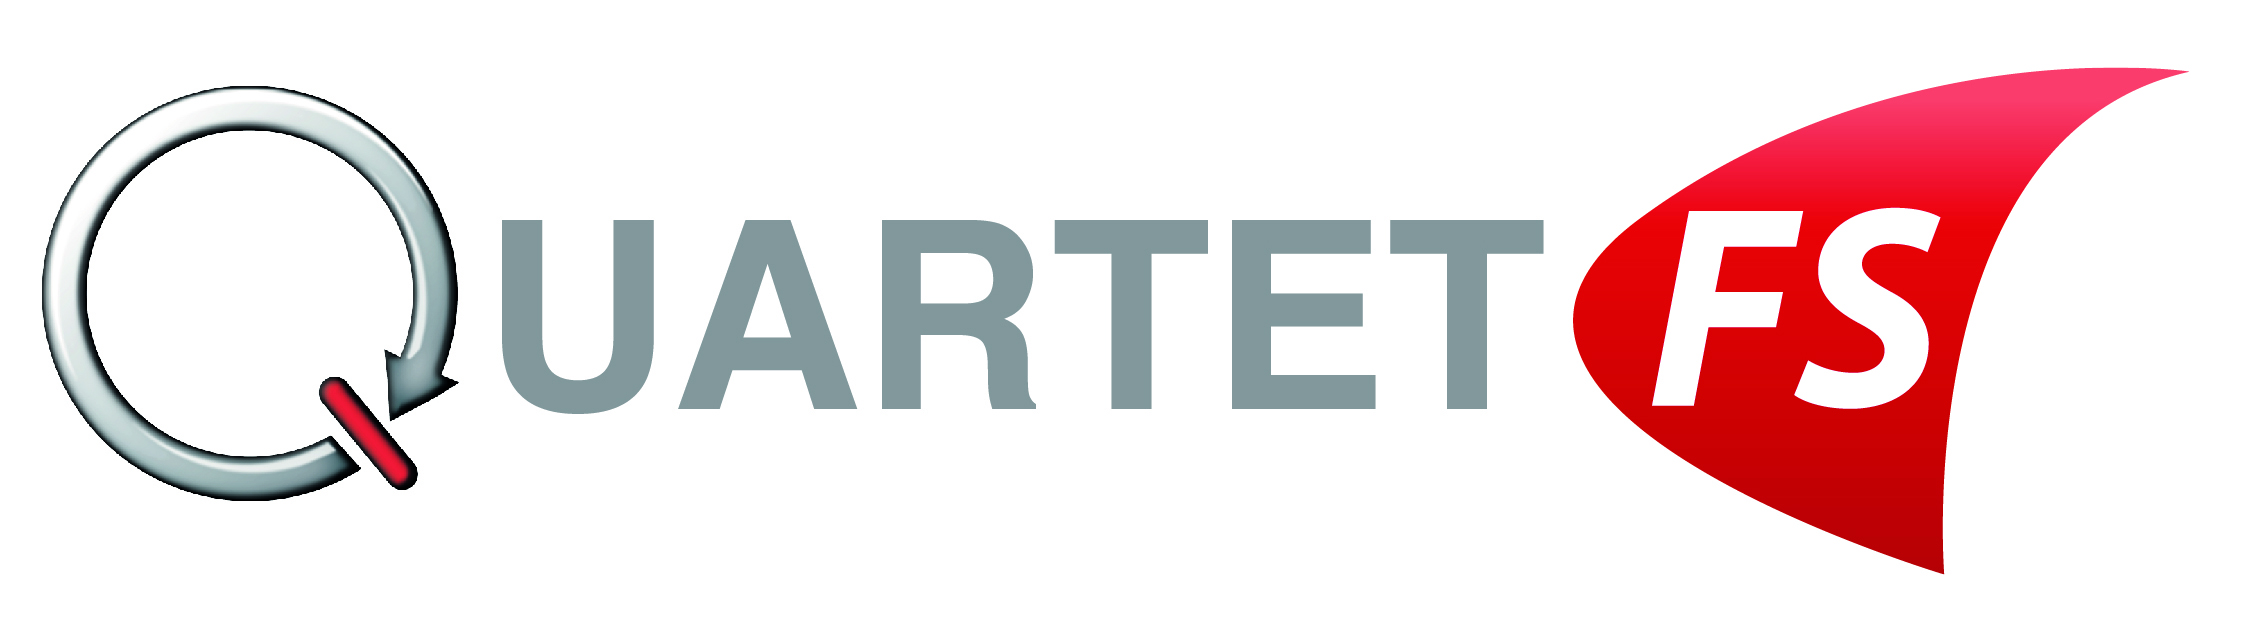 quartetfs-logo-jpg